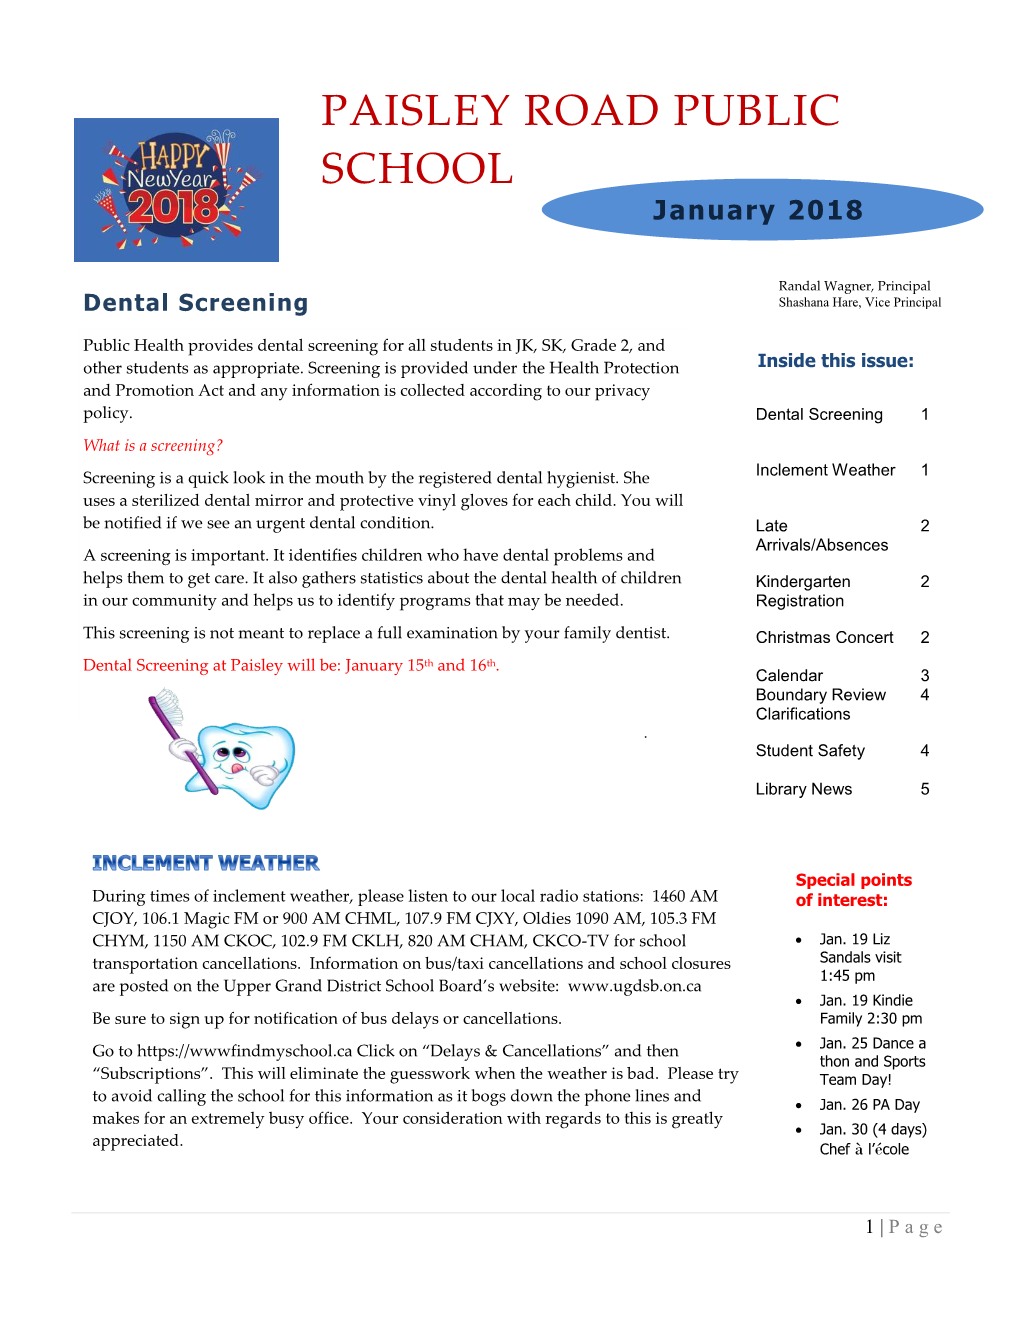 PAISLEY ROAD PUBLIC SCHOOL January 2018